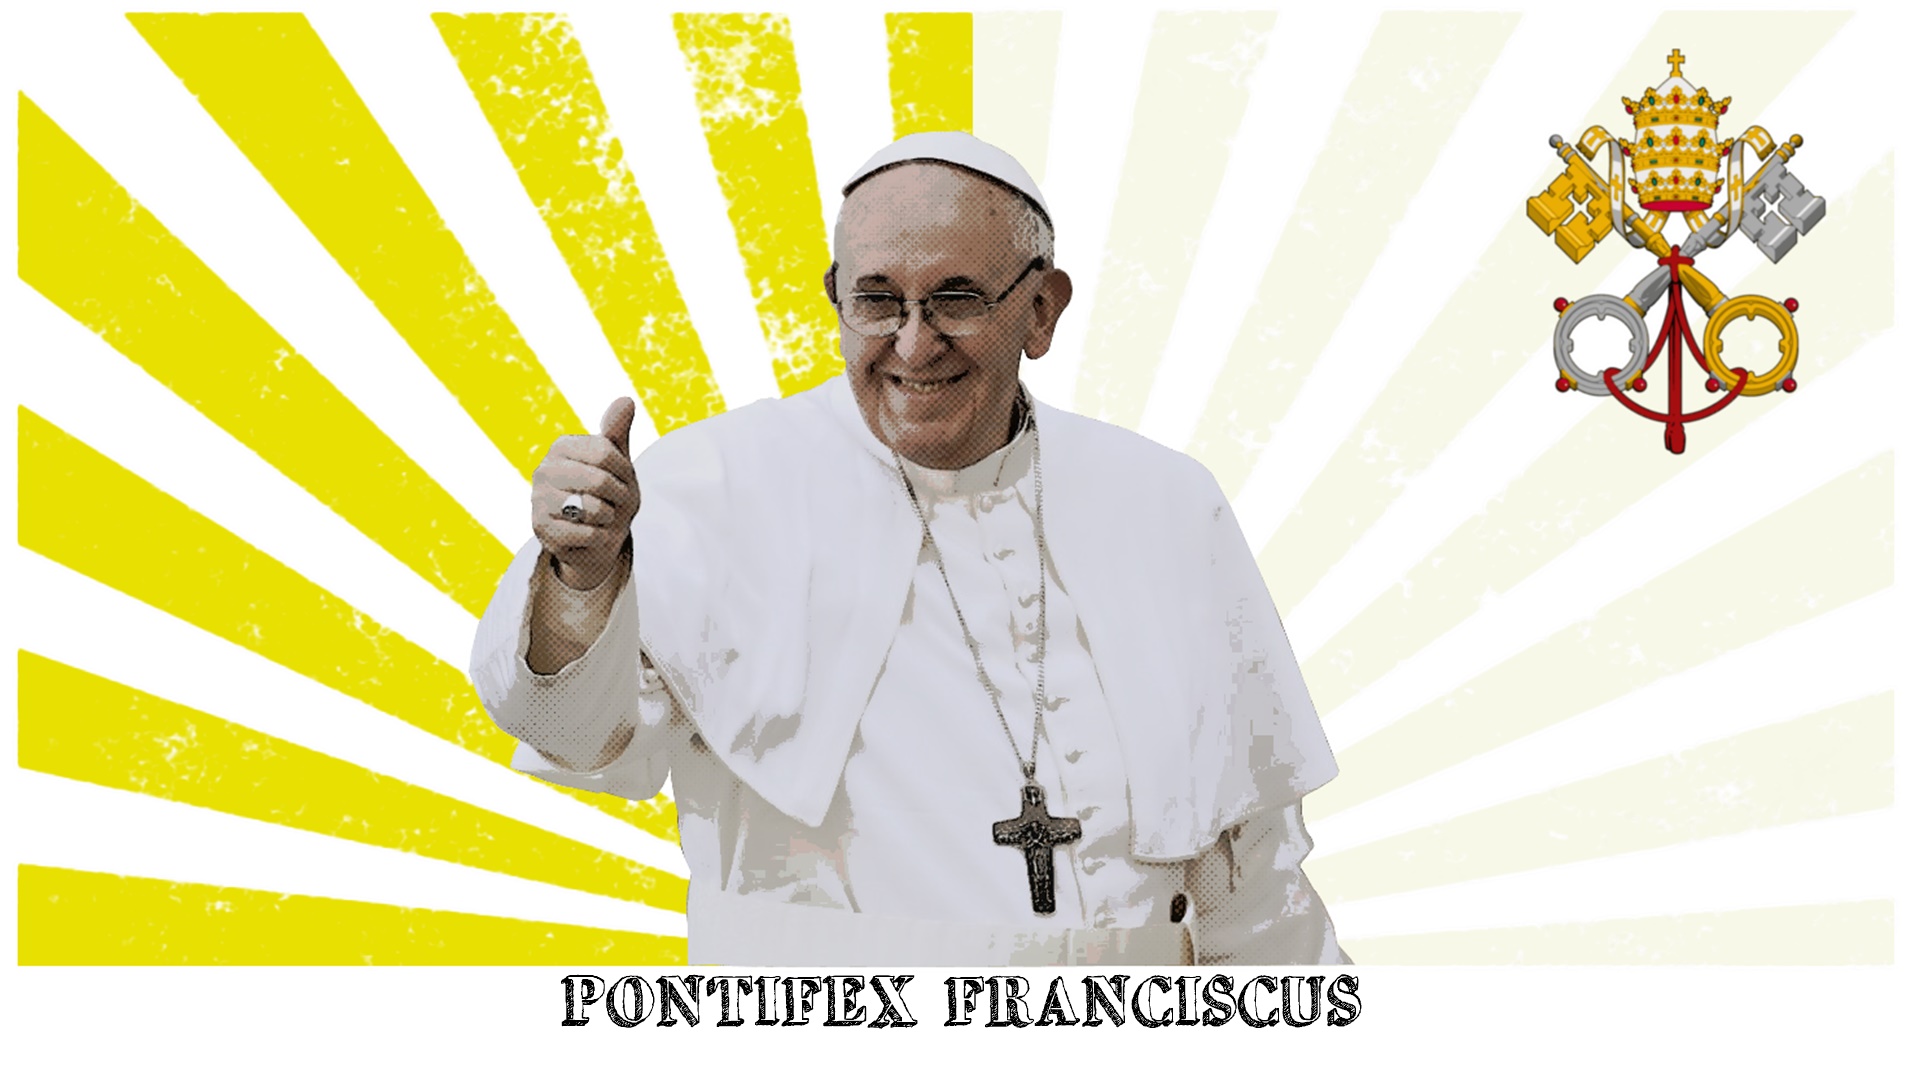 Keys Flag Christianity Catholic Pope Vatican City Pop Art 1920x1080